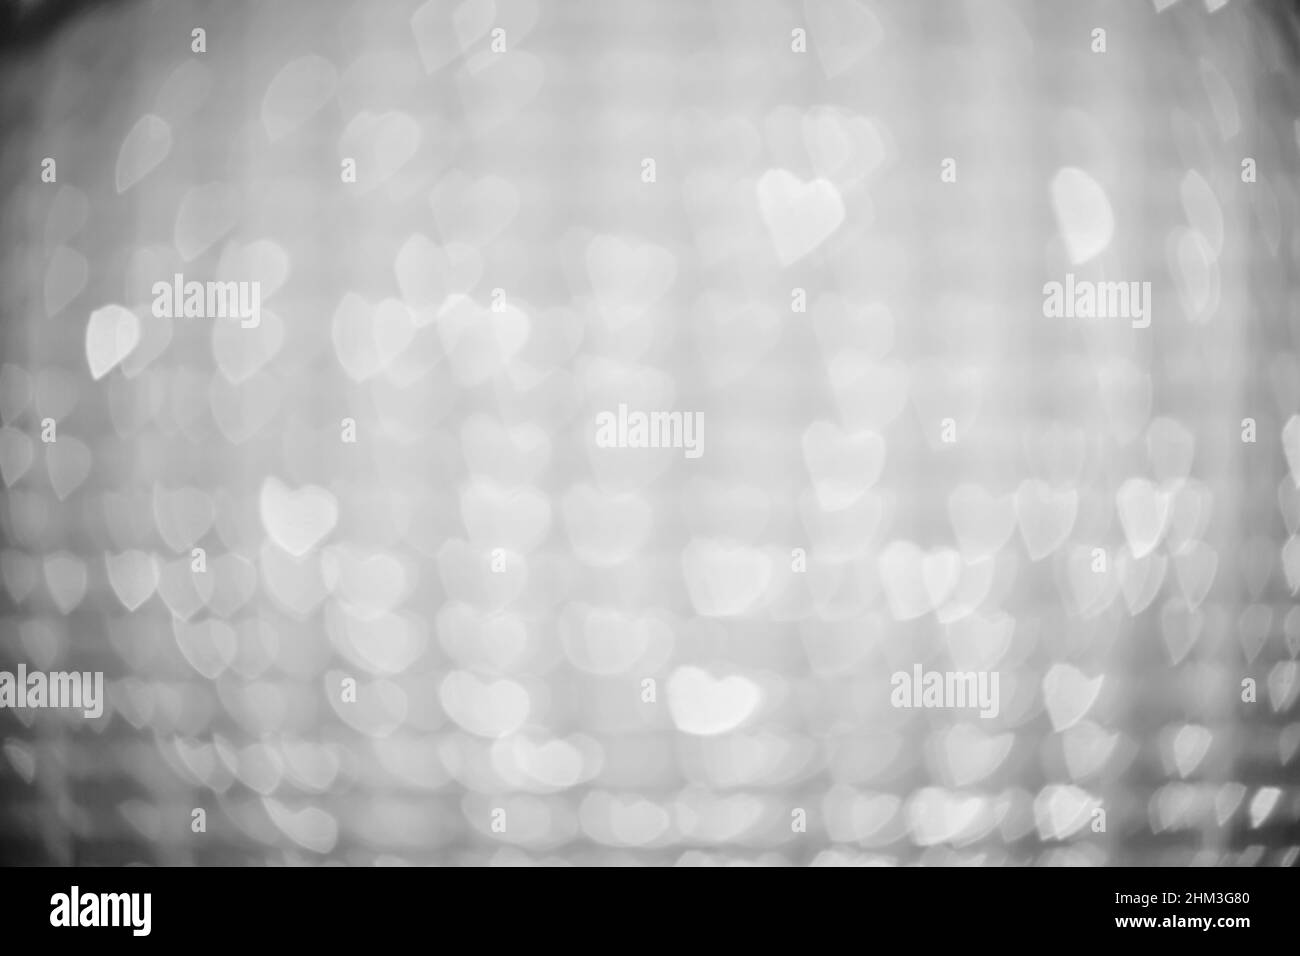 White blurry shining heart-shaped lights background Stock Photo